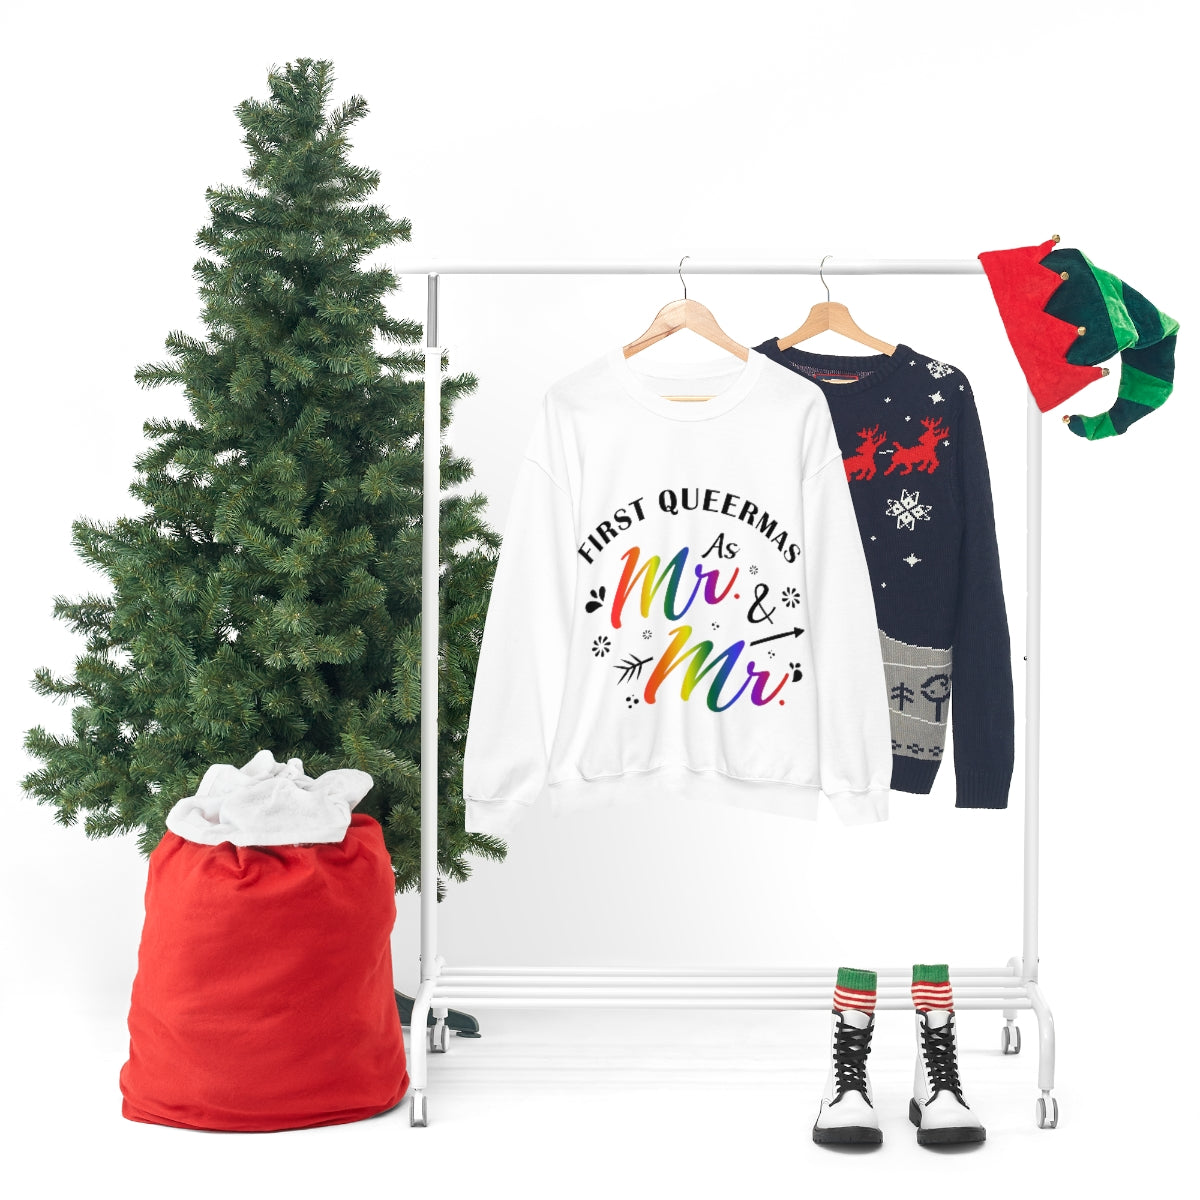 Unisex Christmas LGBTQ Heavy Blend Crewneck Sweatshirt - First Queermas As Mr. & Mr. Printify